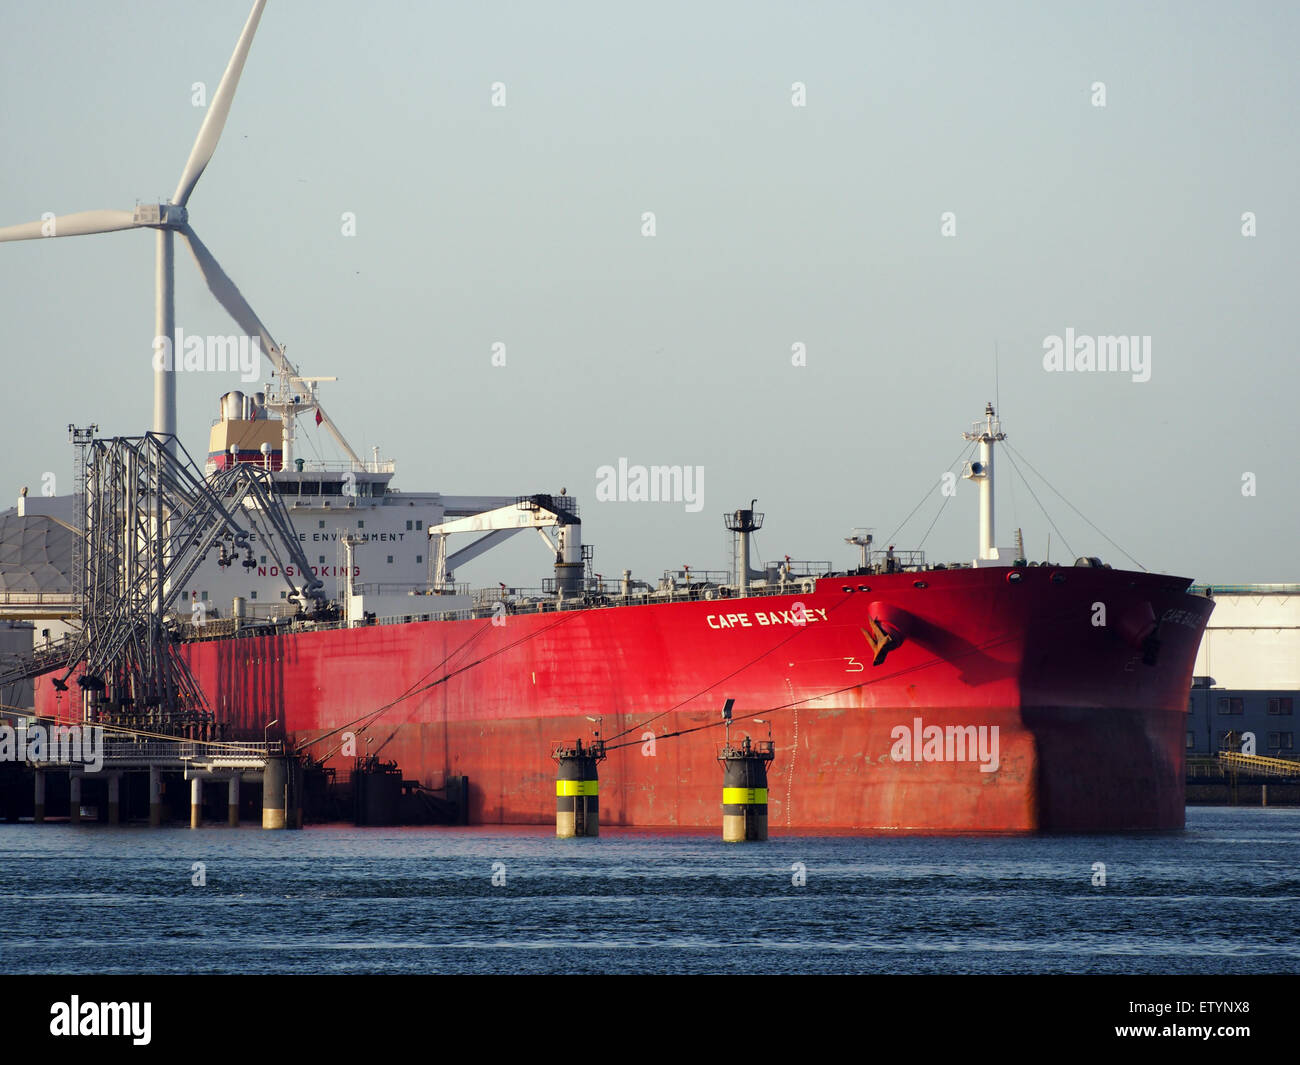 Cape Baxley - IMO 9248825 - Rufzeichen V7EQ2, 7e Petroleumhaven Hafen von Rotterdam Stockfoto